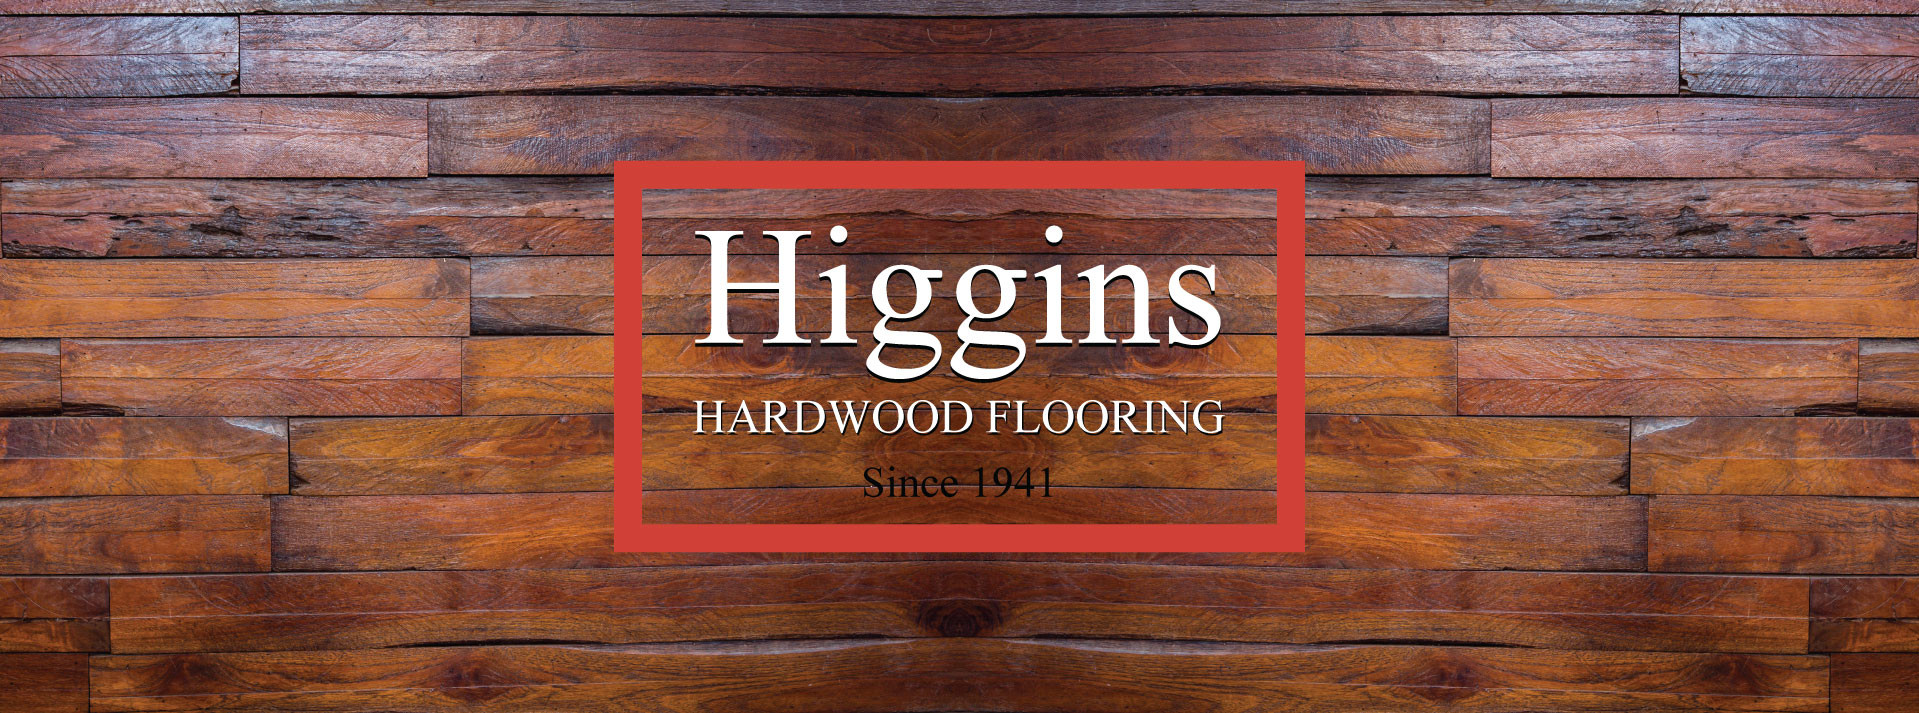 22 attractive Hardwood Floor Restoration toronto 2022 free download hardwood floor restoration toronto of higgins hardwood flooring in peterborough oshawa lindsay ajax within office hours